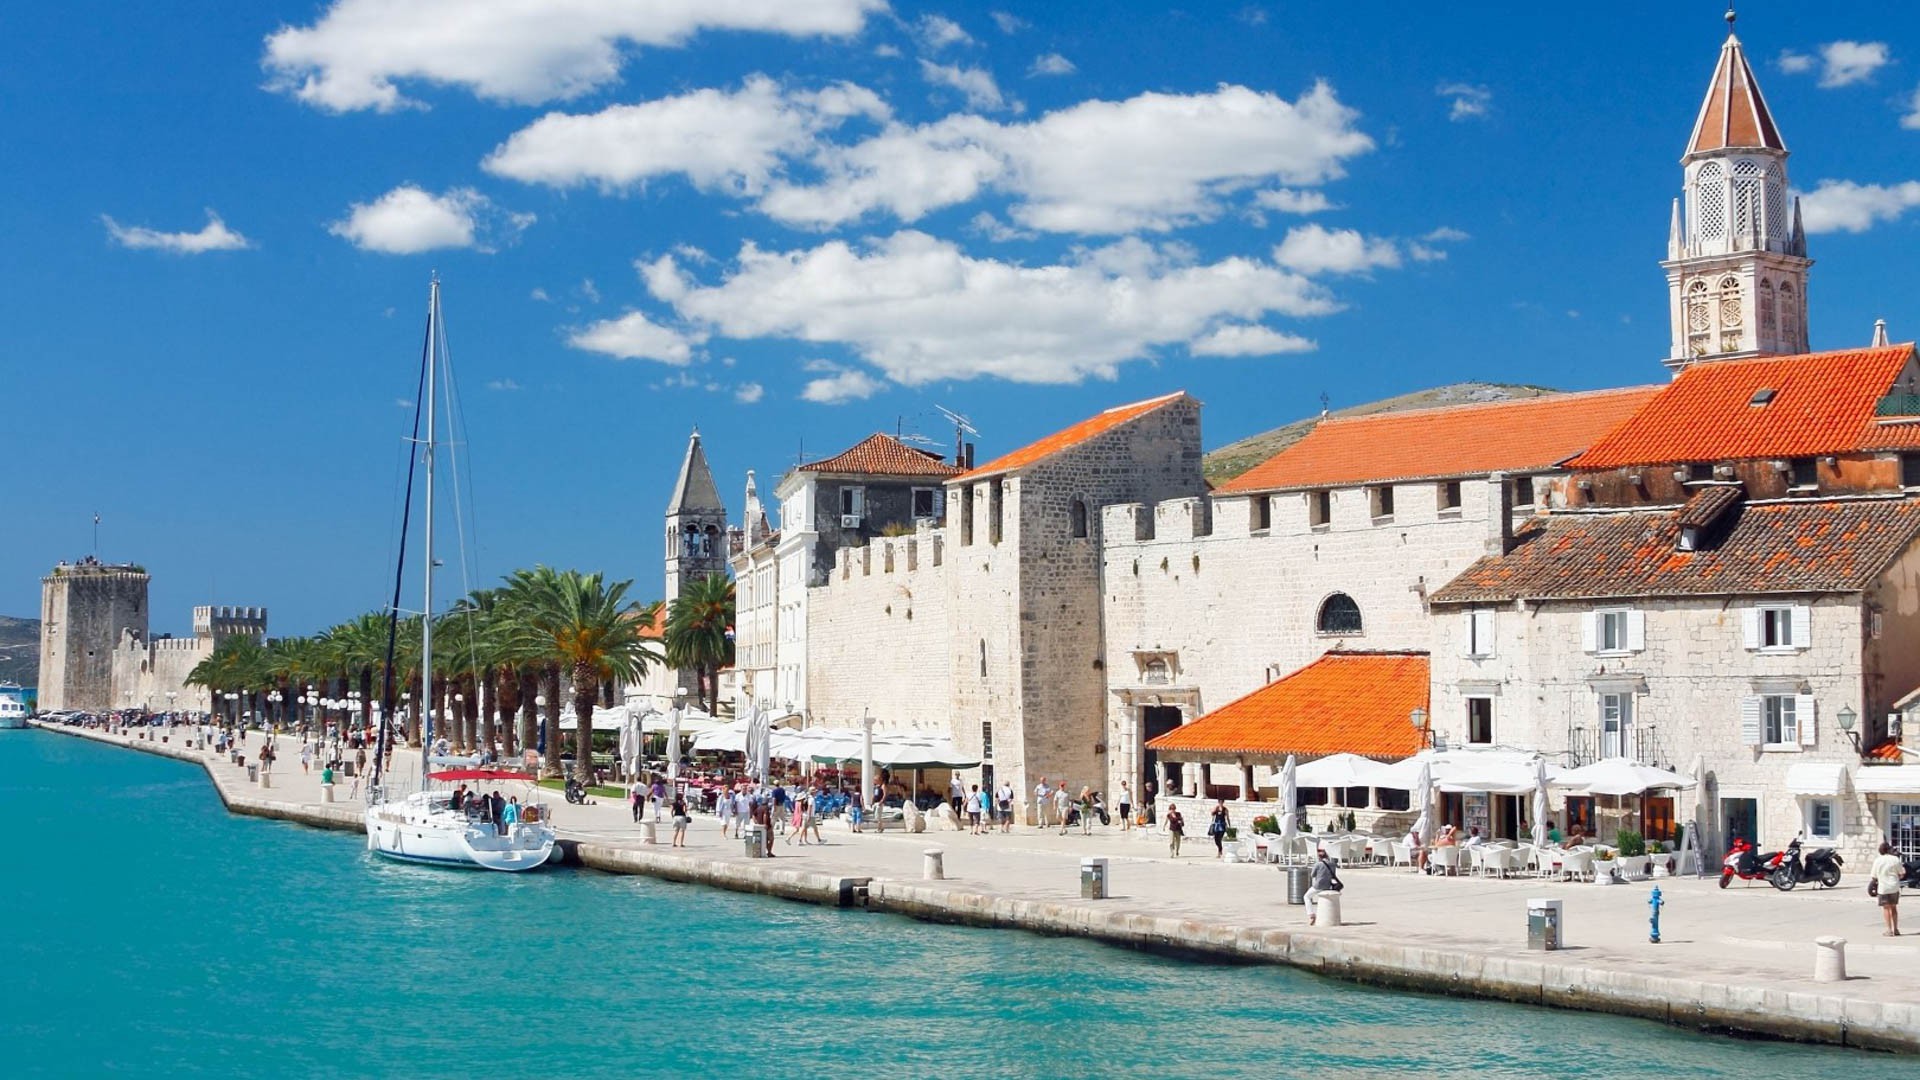 Trogir - Adriatic Sea | Croatia Cruise Croatia Cruise